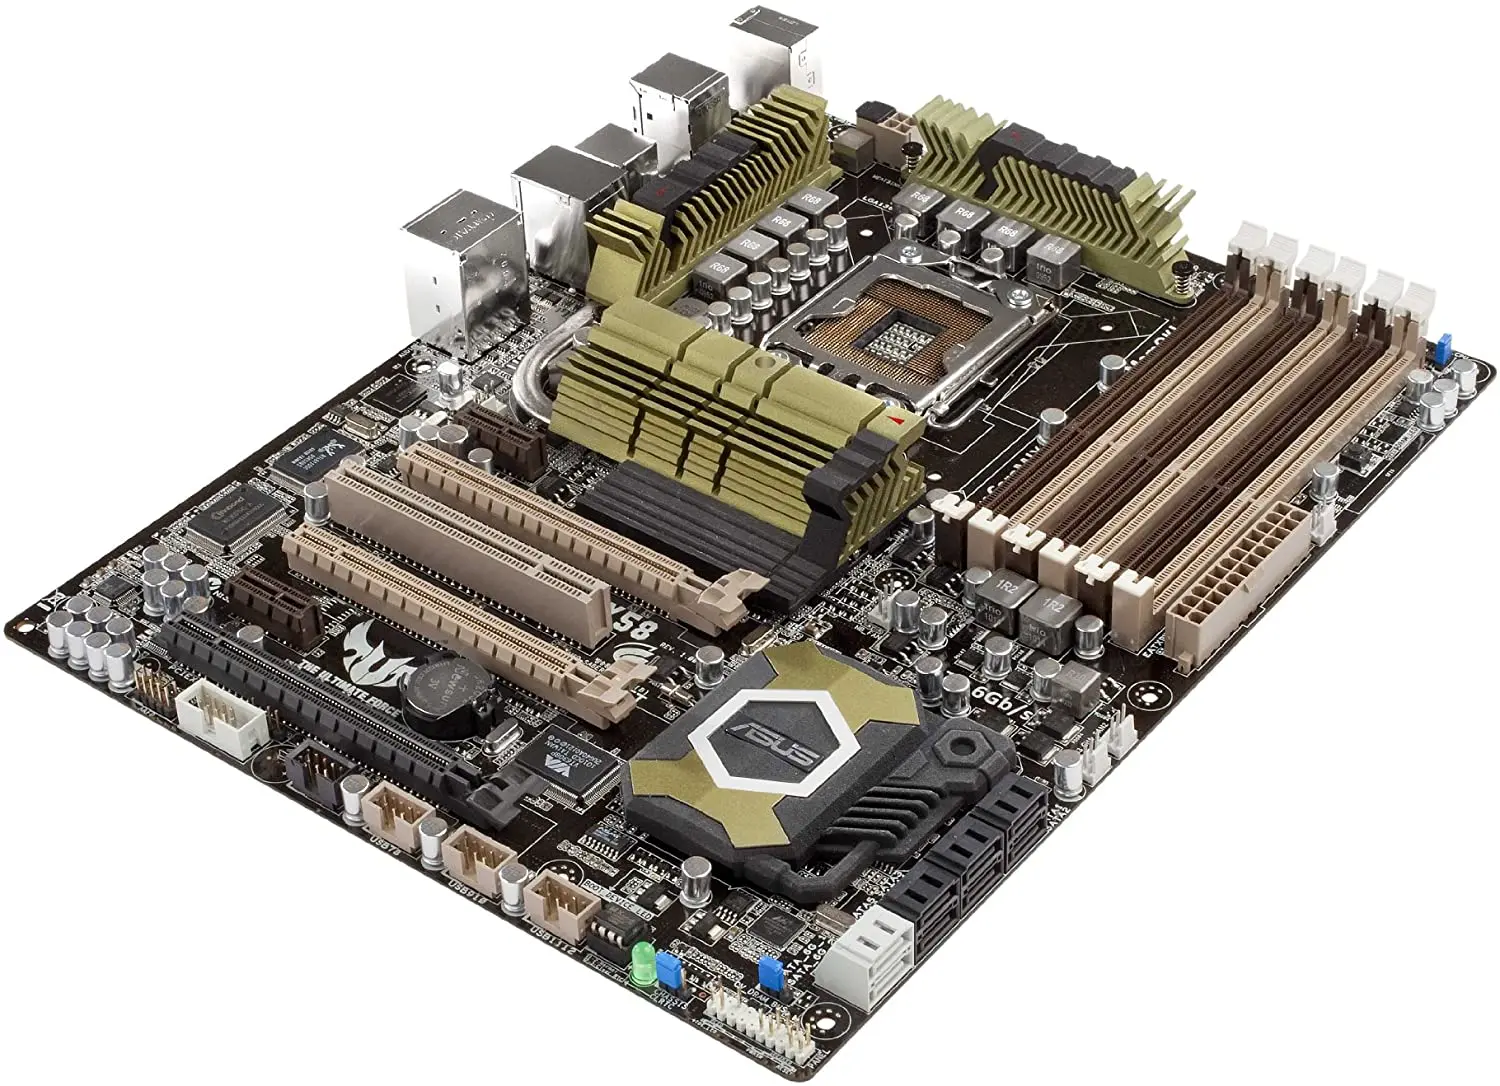 Intel X58 ASUS SaberTooth X58 Desktop motherboard LGA 1366 DDR3 24GB USB3.0 support Core i7 940 Edition 975 cpus ATX Placa-mãe